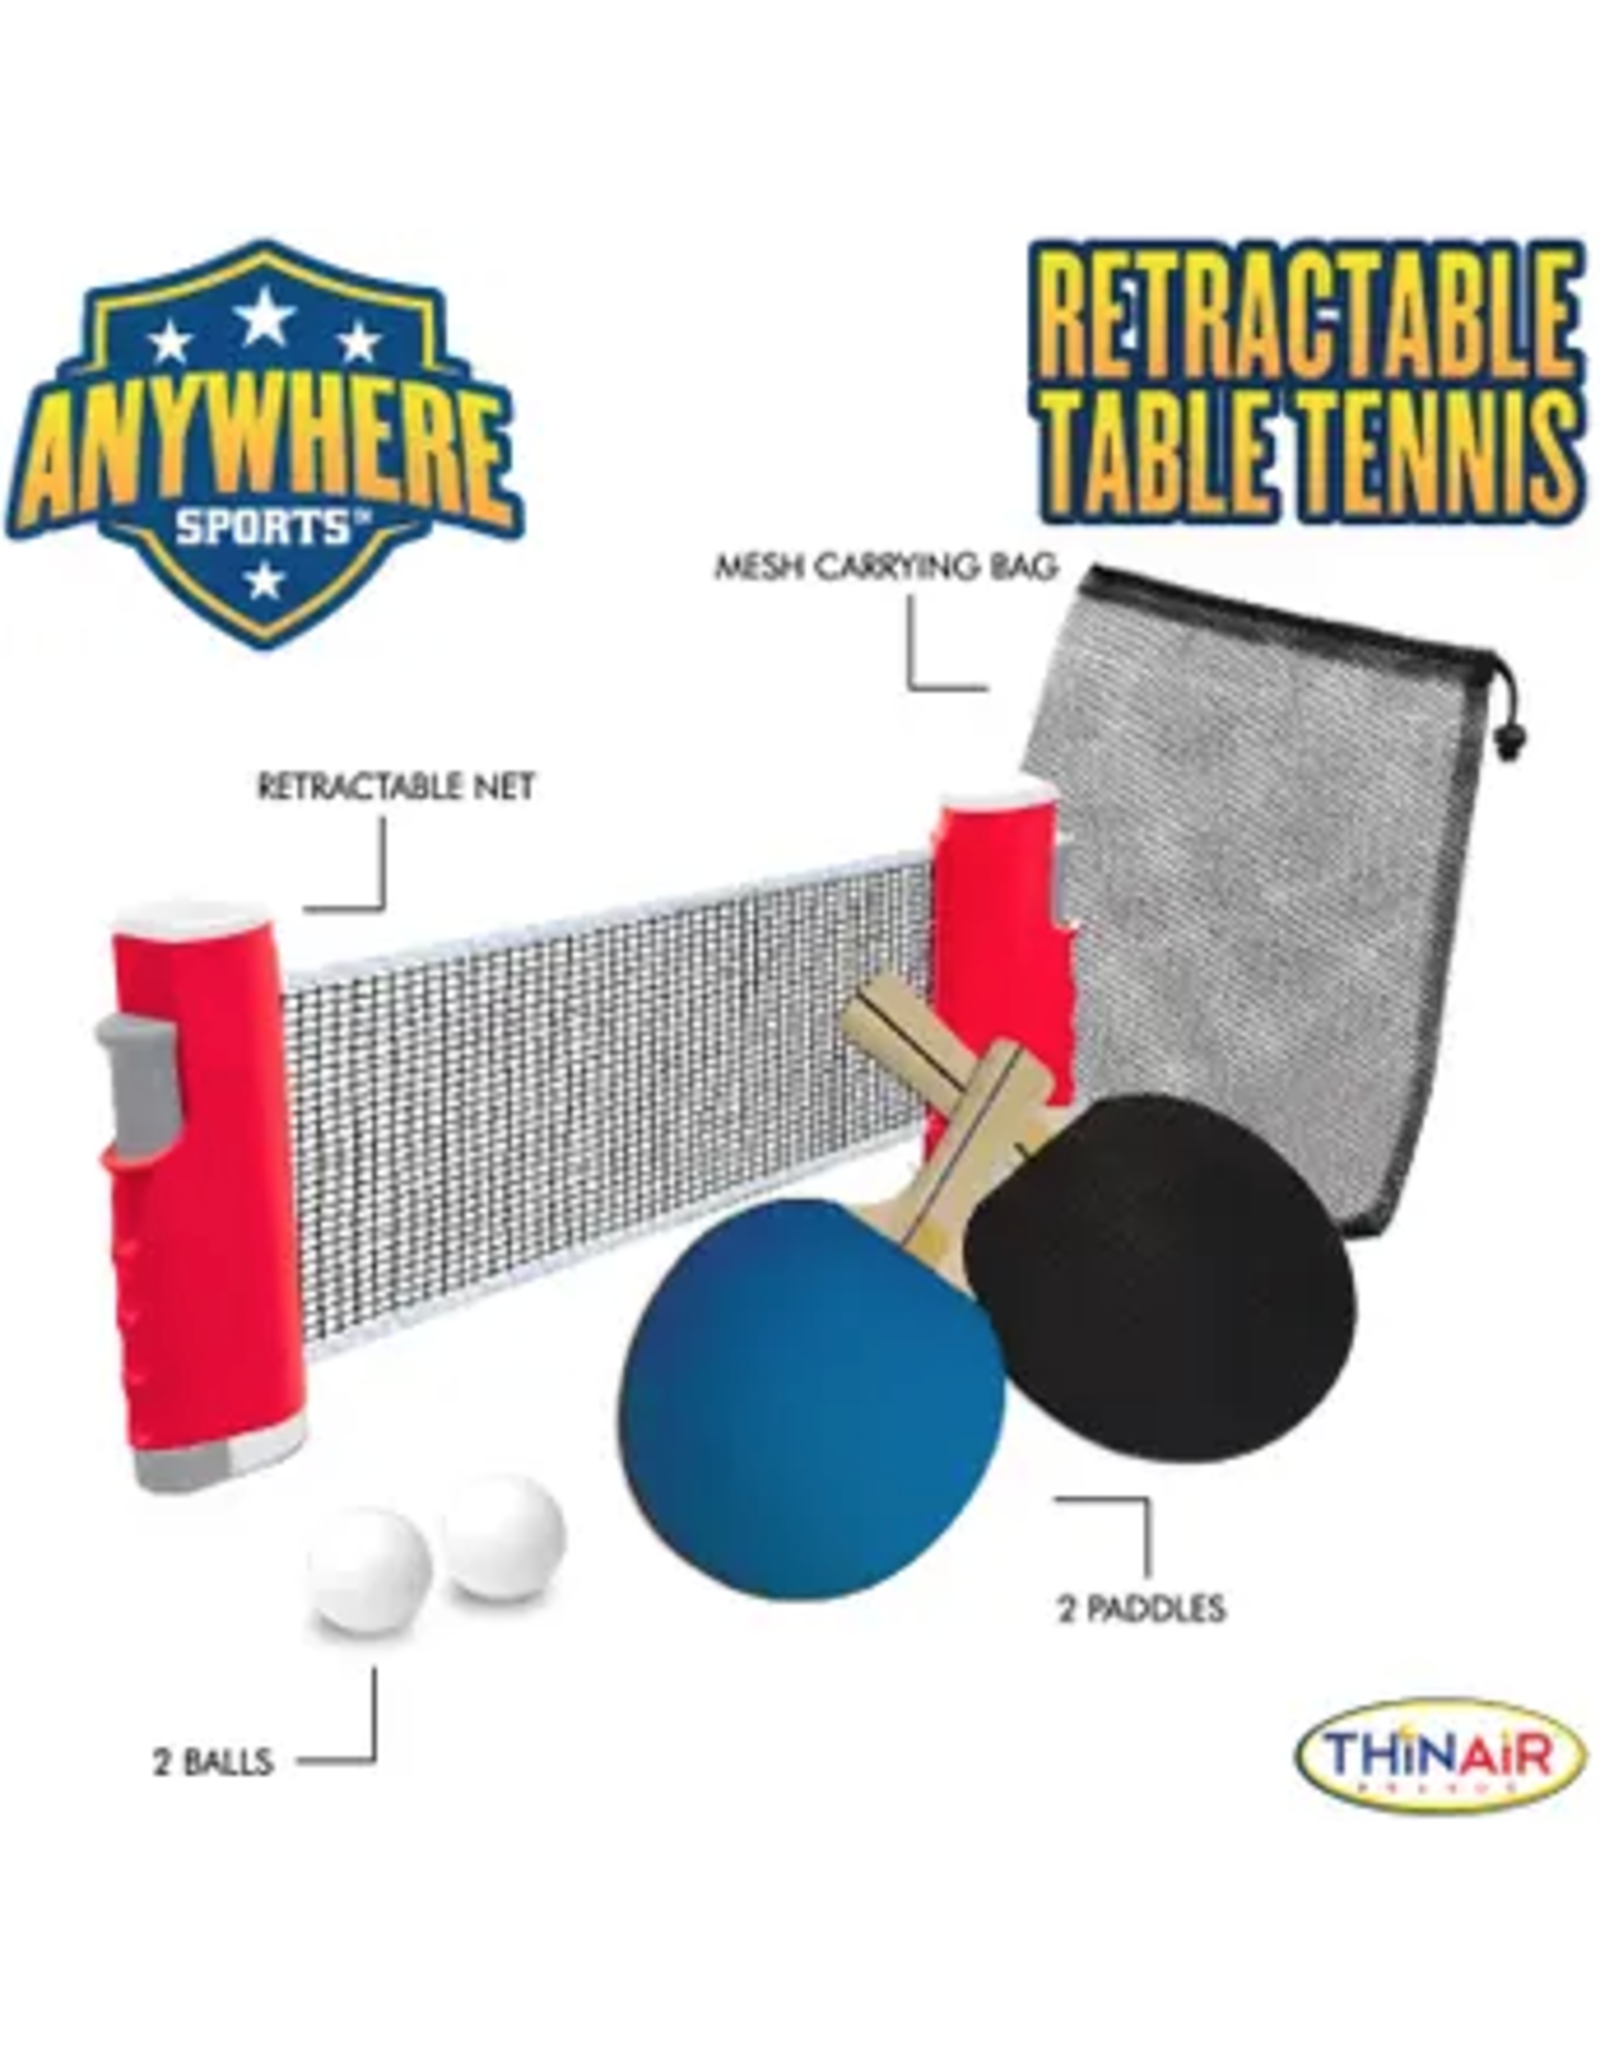 THiN AiR Brands Retractable Table Tennis Set